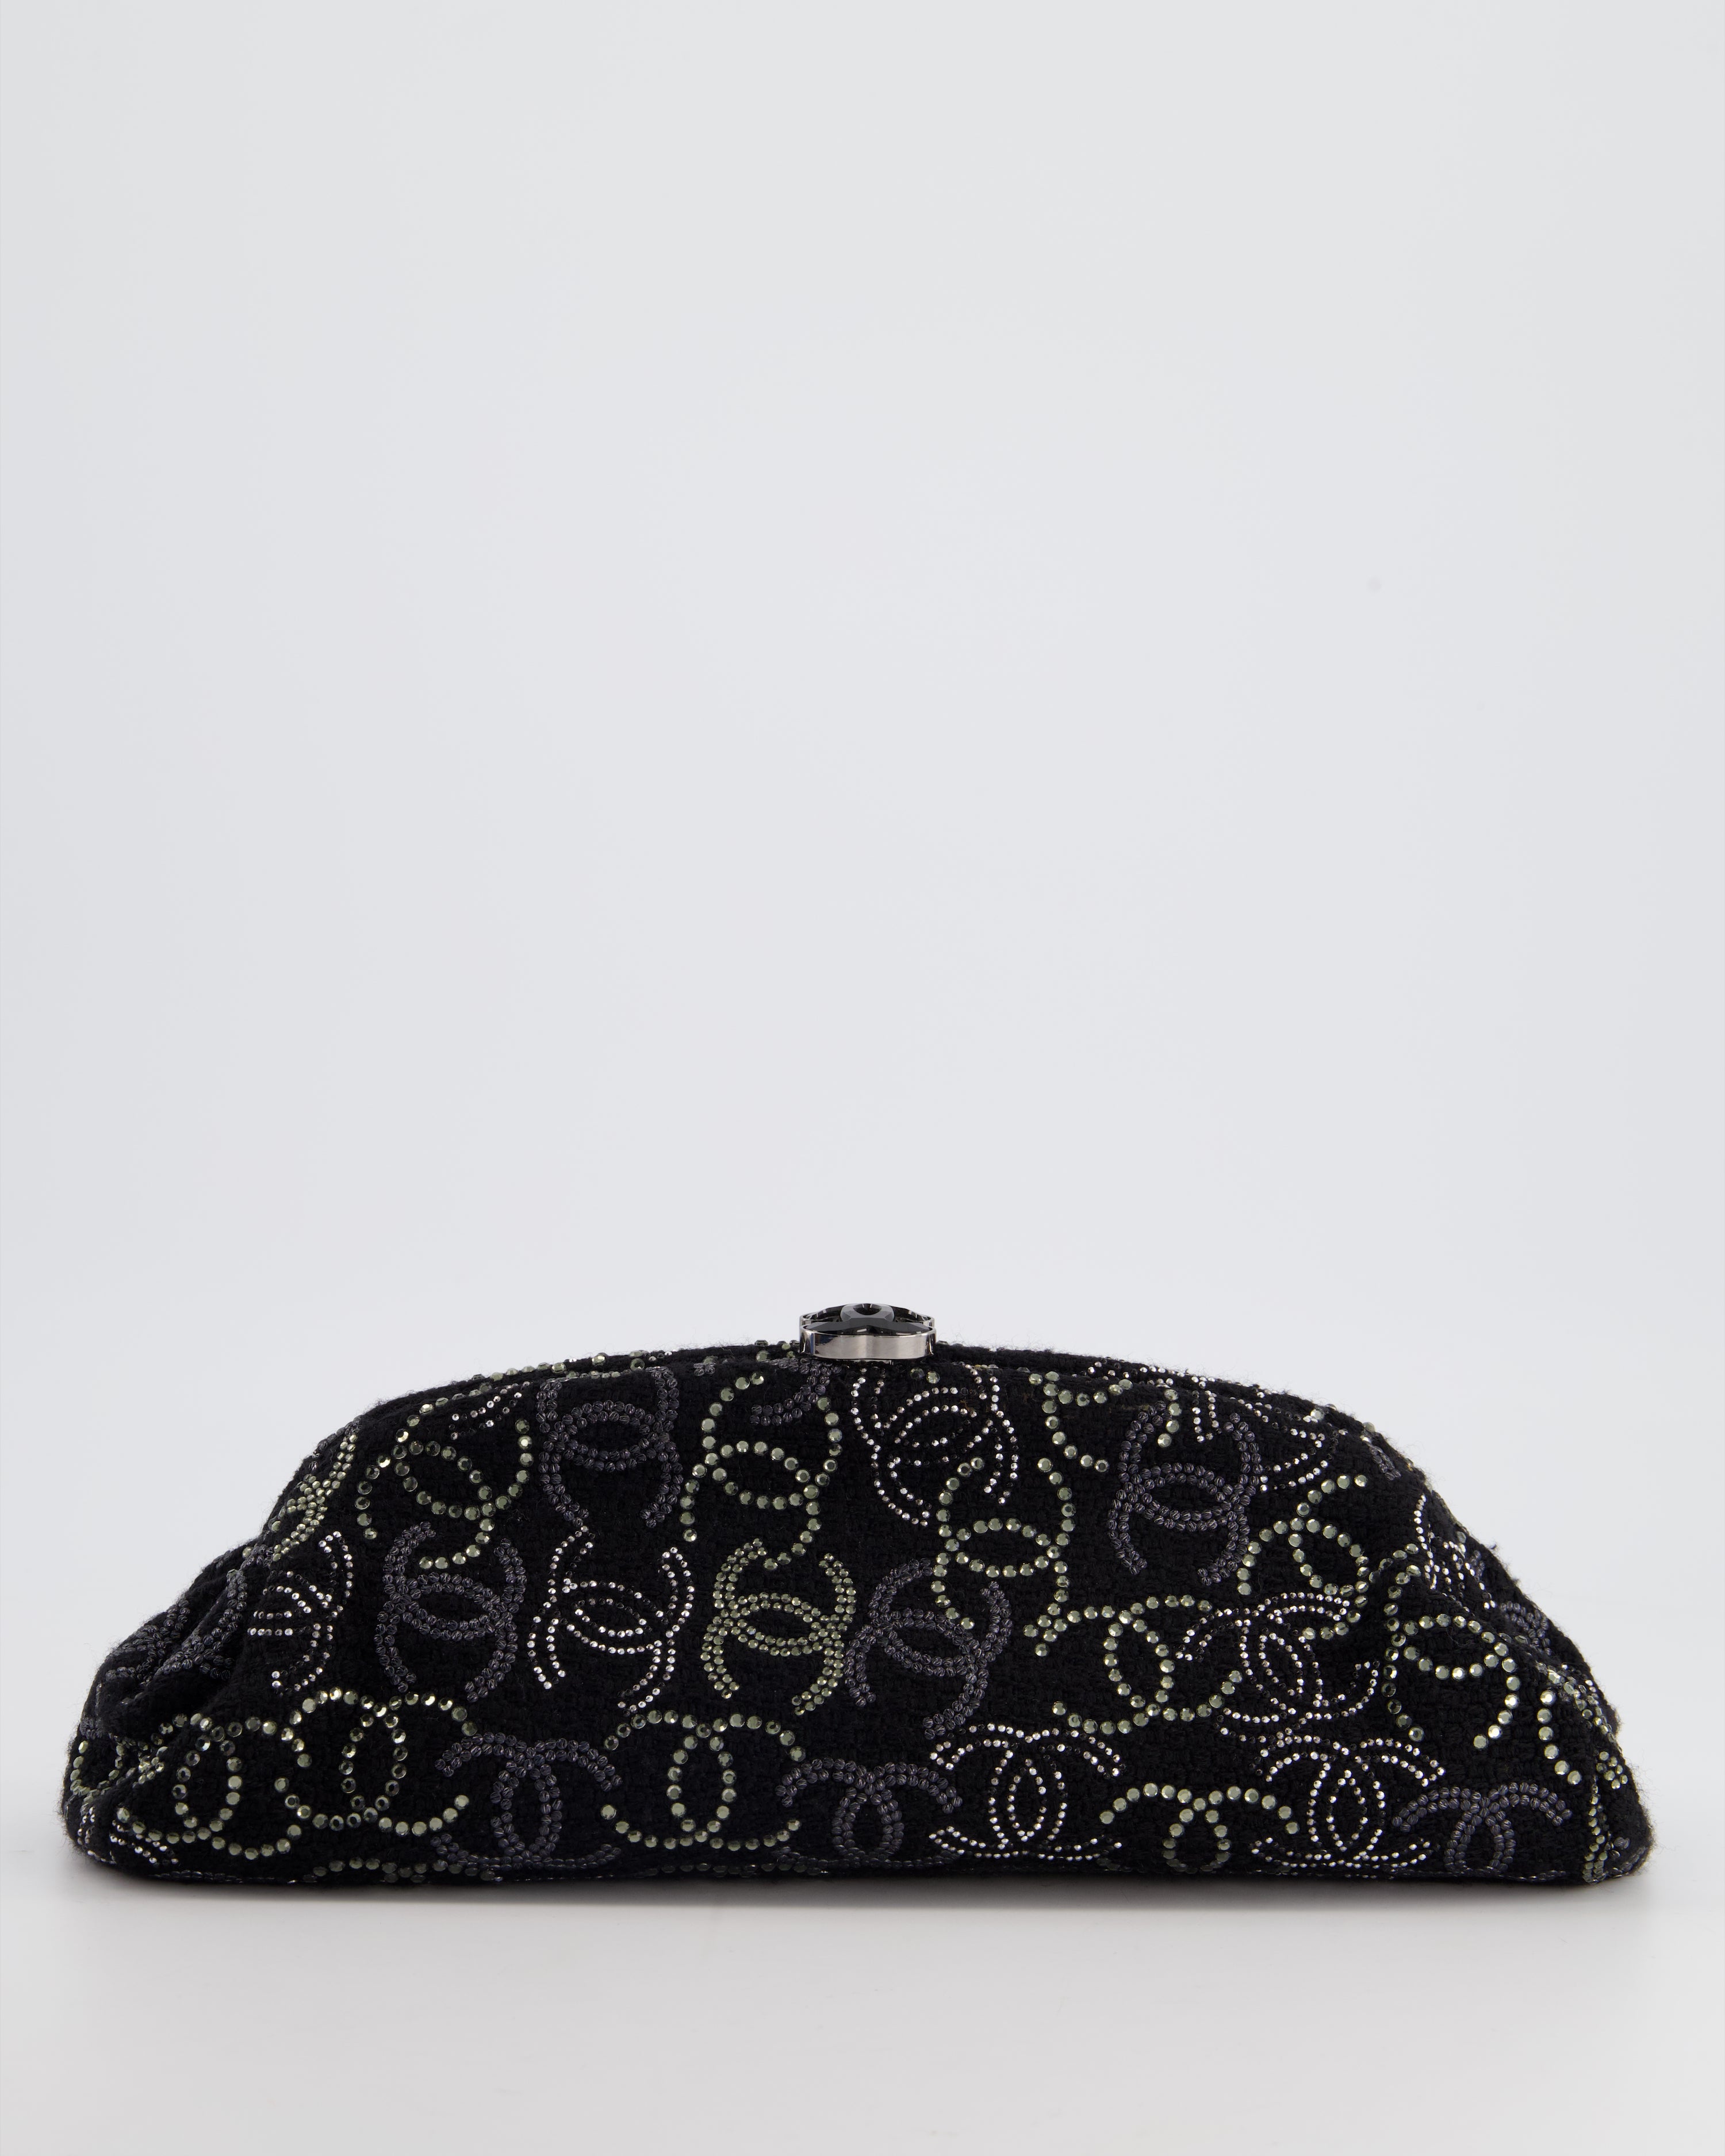 double flap chanel handbag